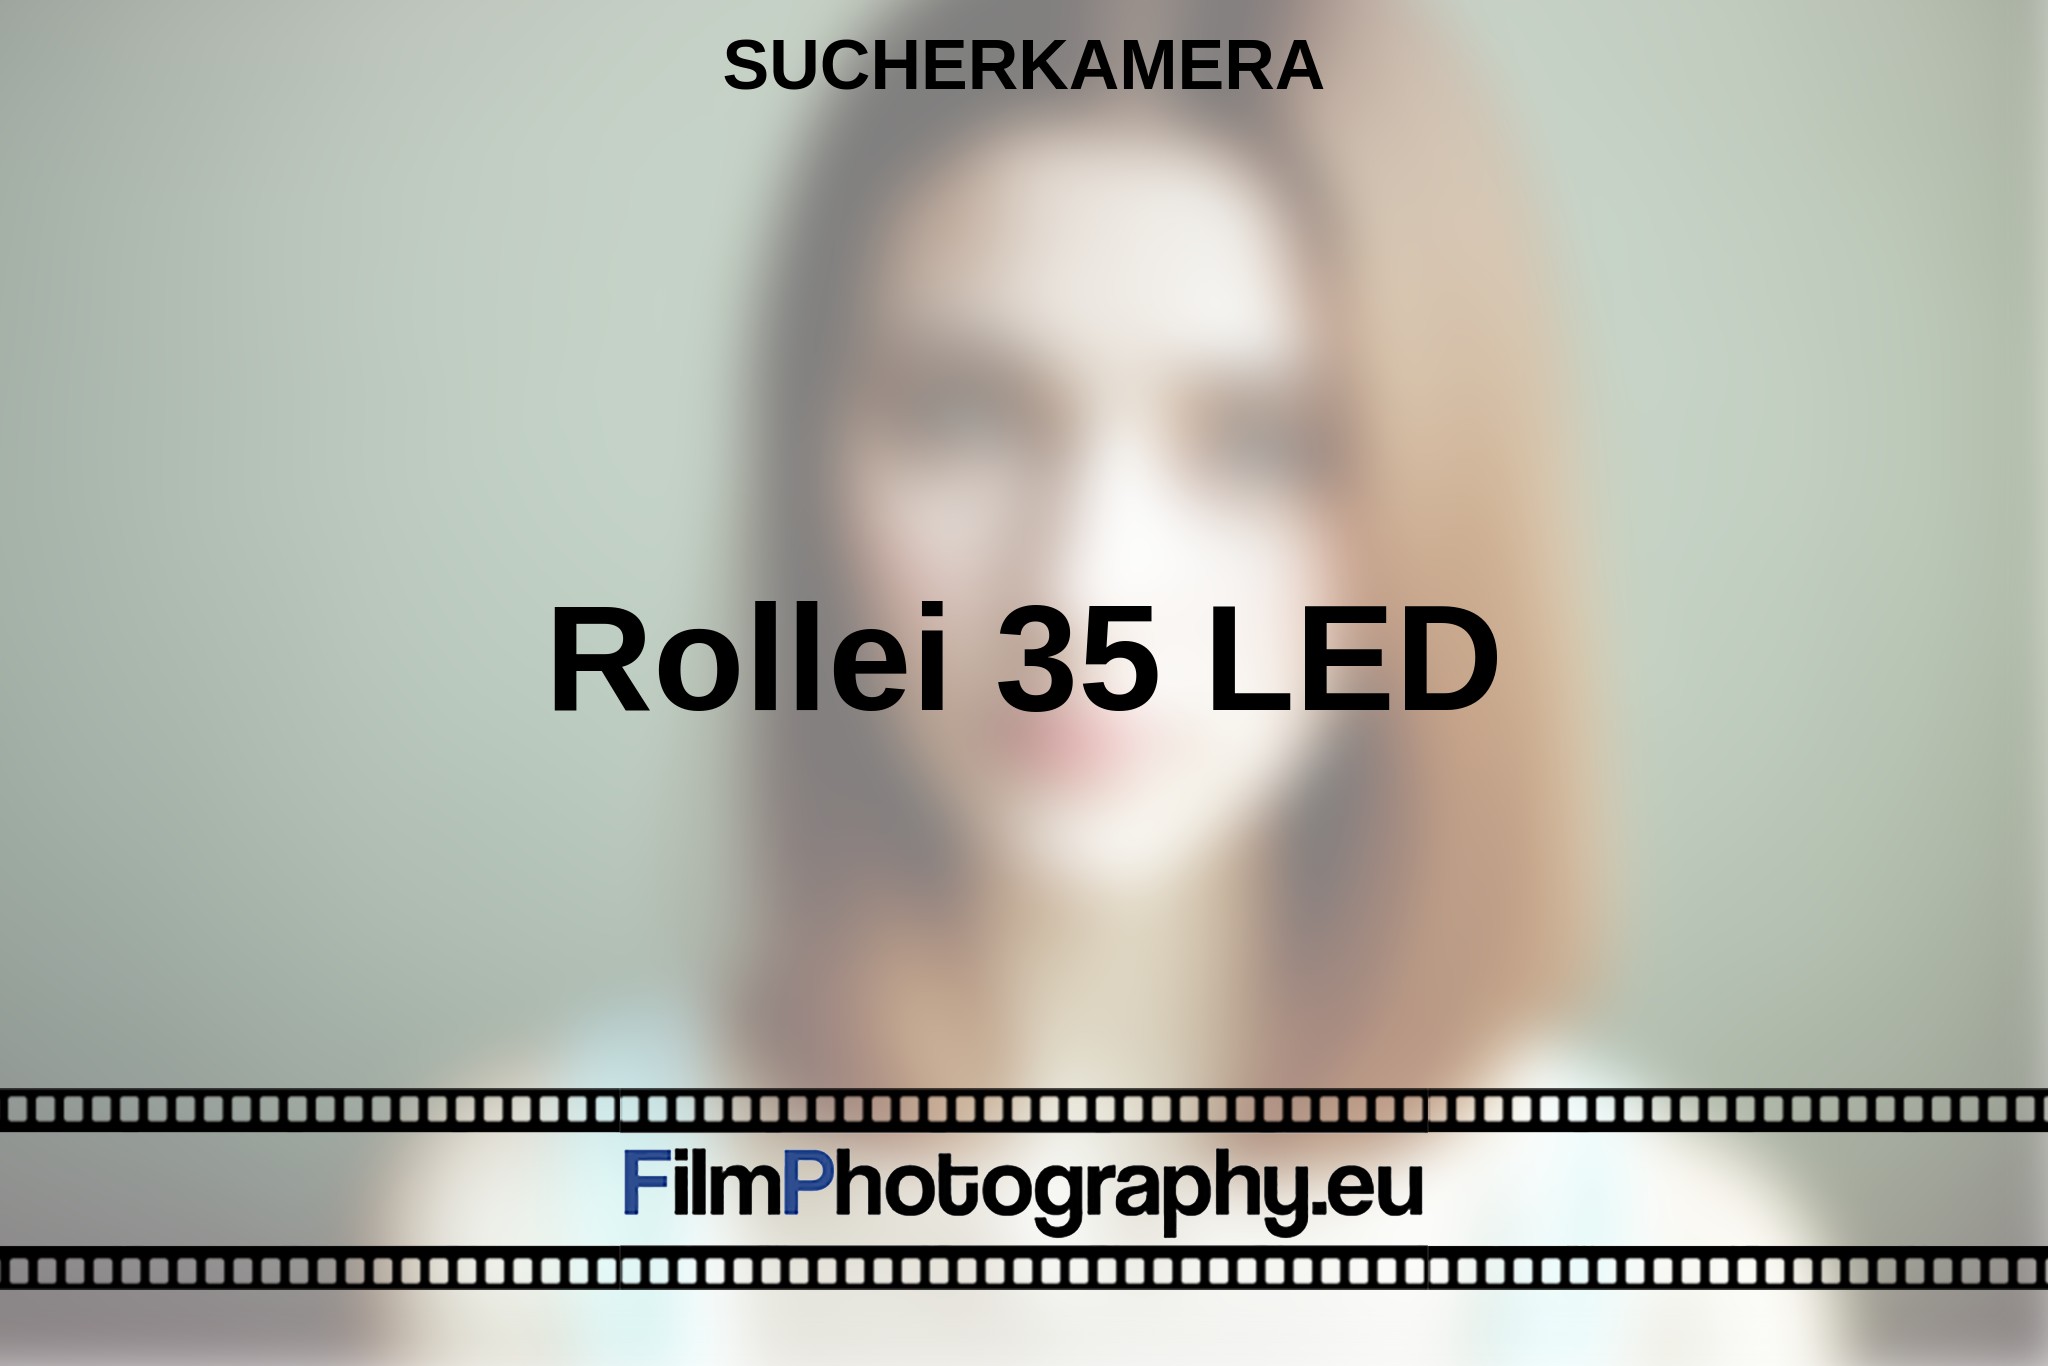 rollei-35-led-sucherkamera-bnv.jpg